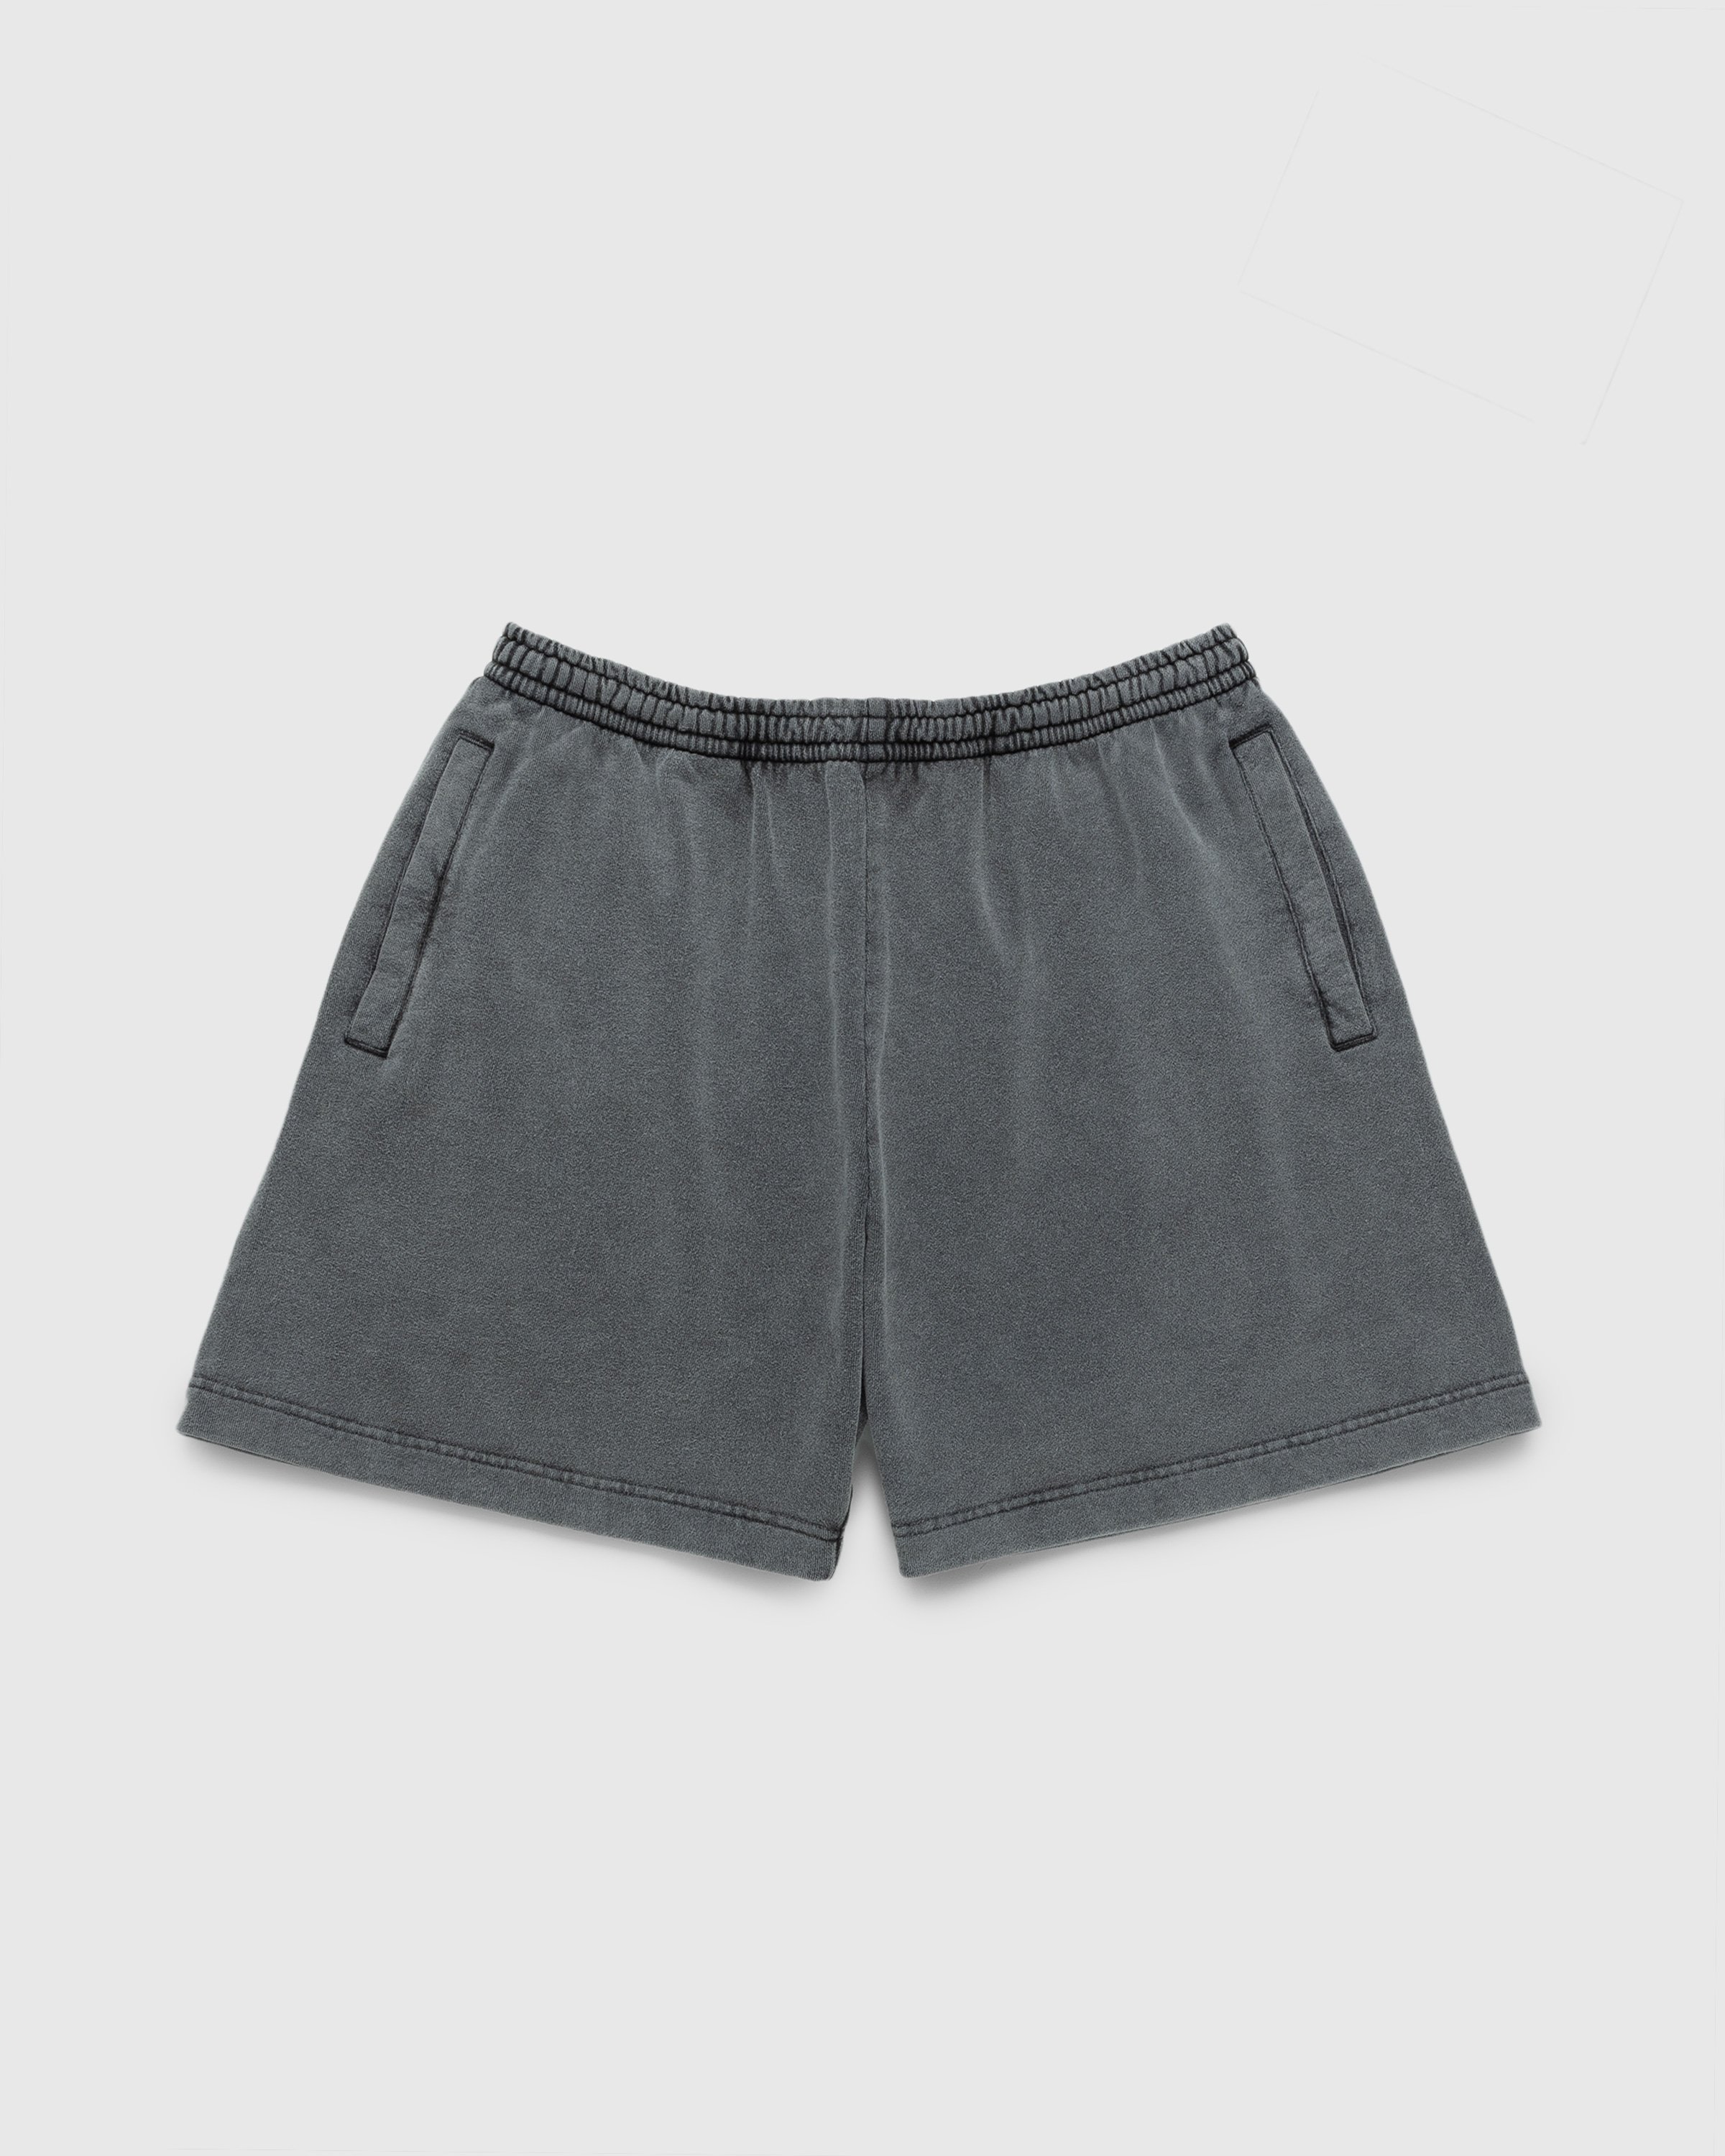 Acne Studios - Cotton Shorts Faded Black - Clothing - Grey - Image 1